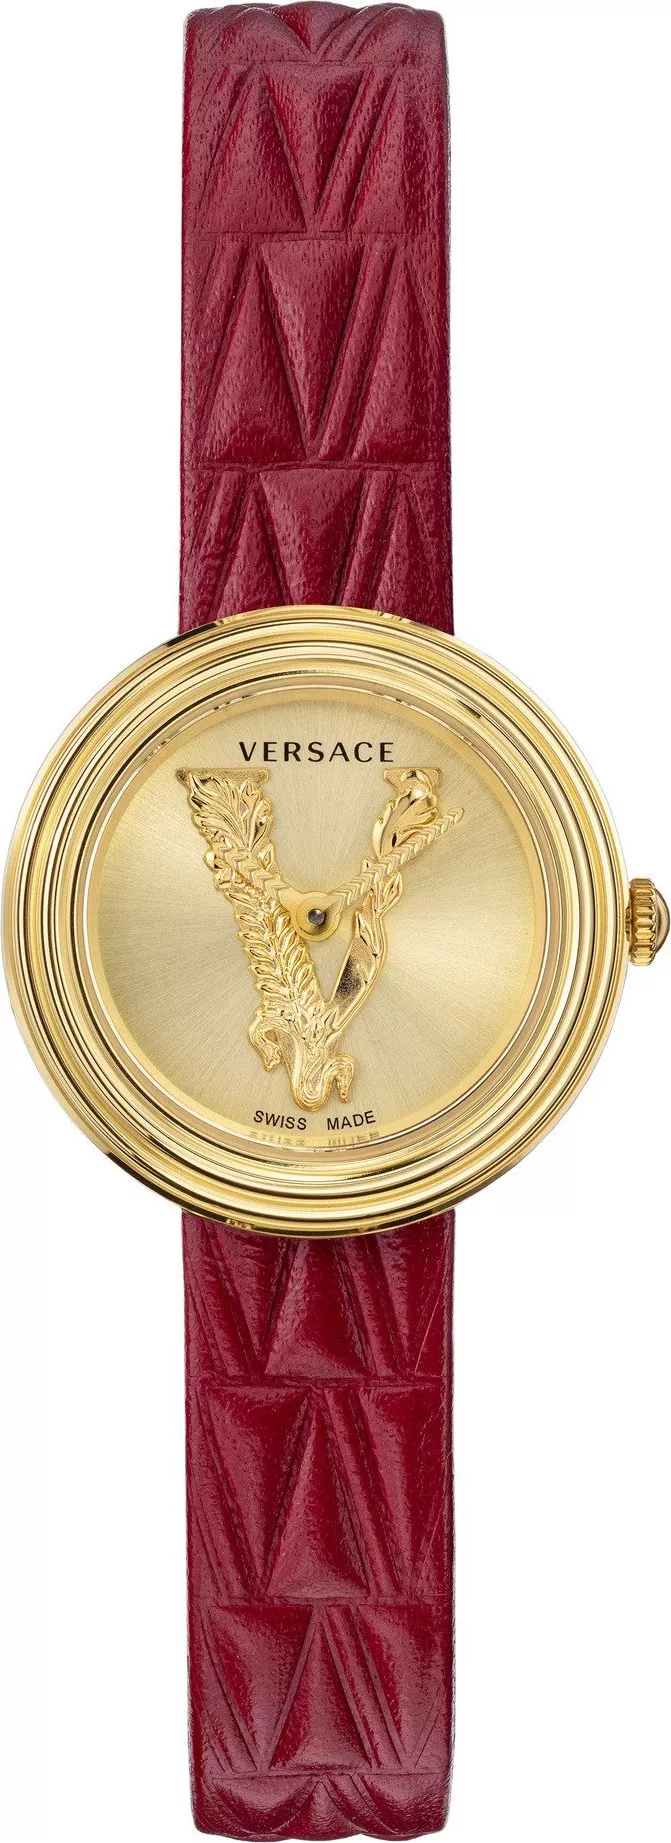 MSP: 95987 Versace Virtus Watch 28mm 20,970,000